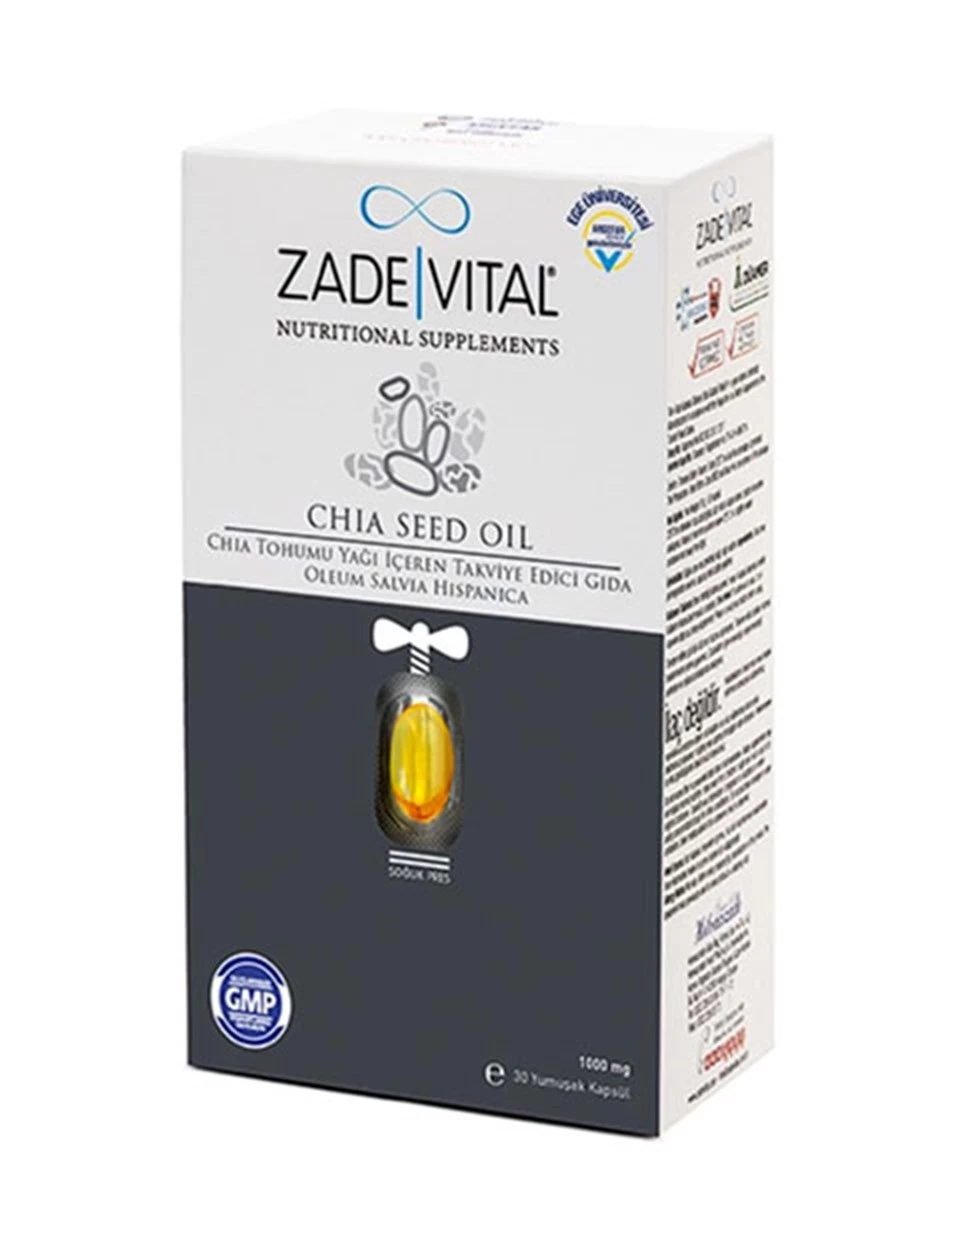 Zade Vital Chia Tohumu Yağı 1000 mg 30 Kapsül